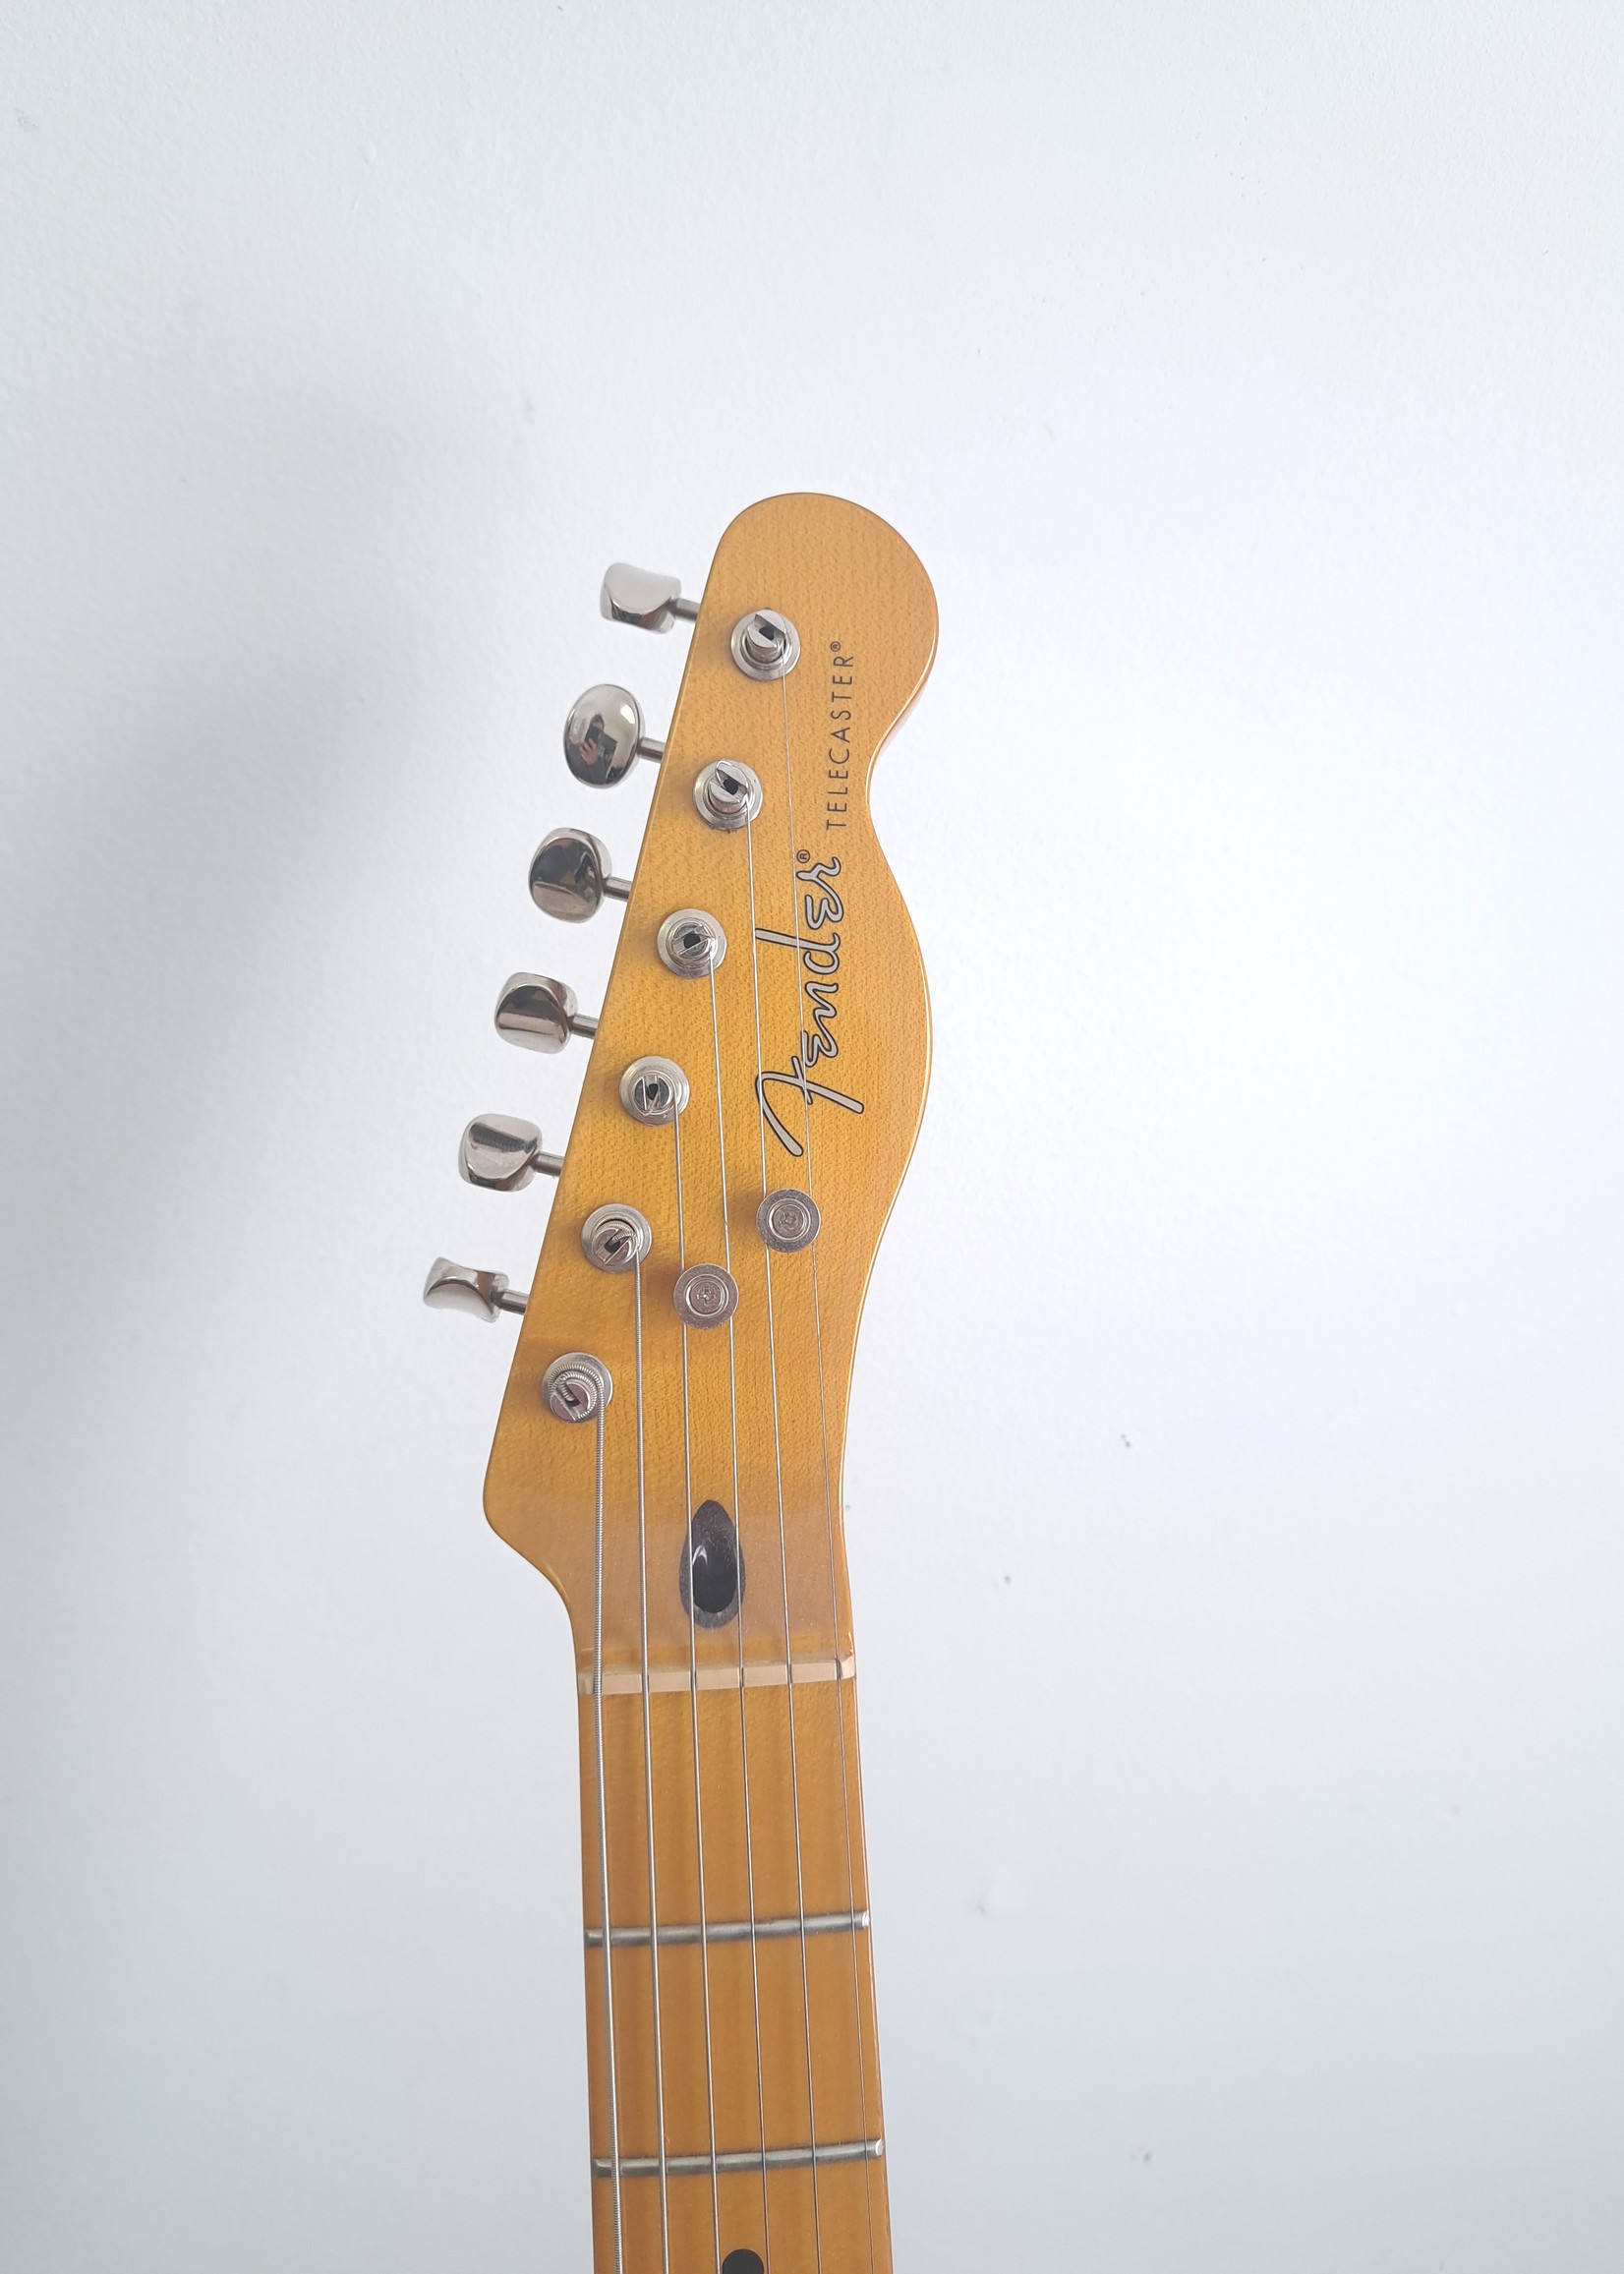 Fender Fender Telecaster translucent black - used